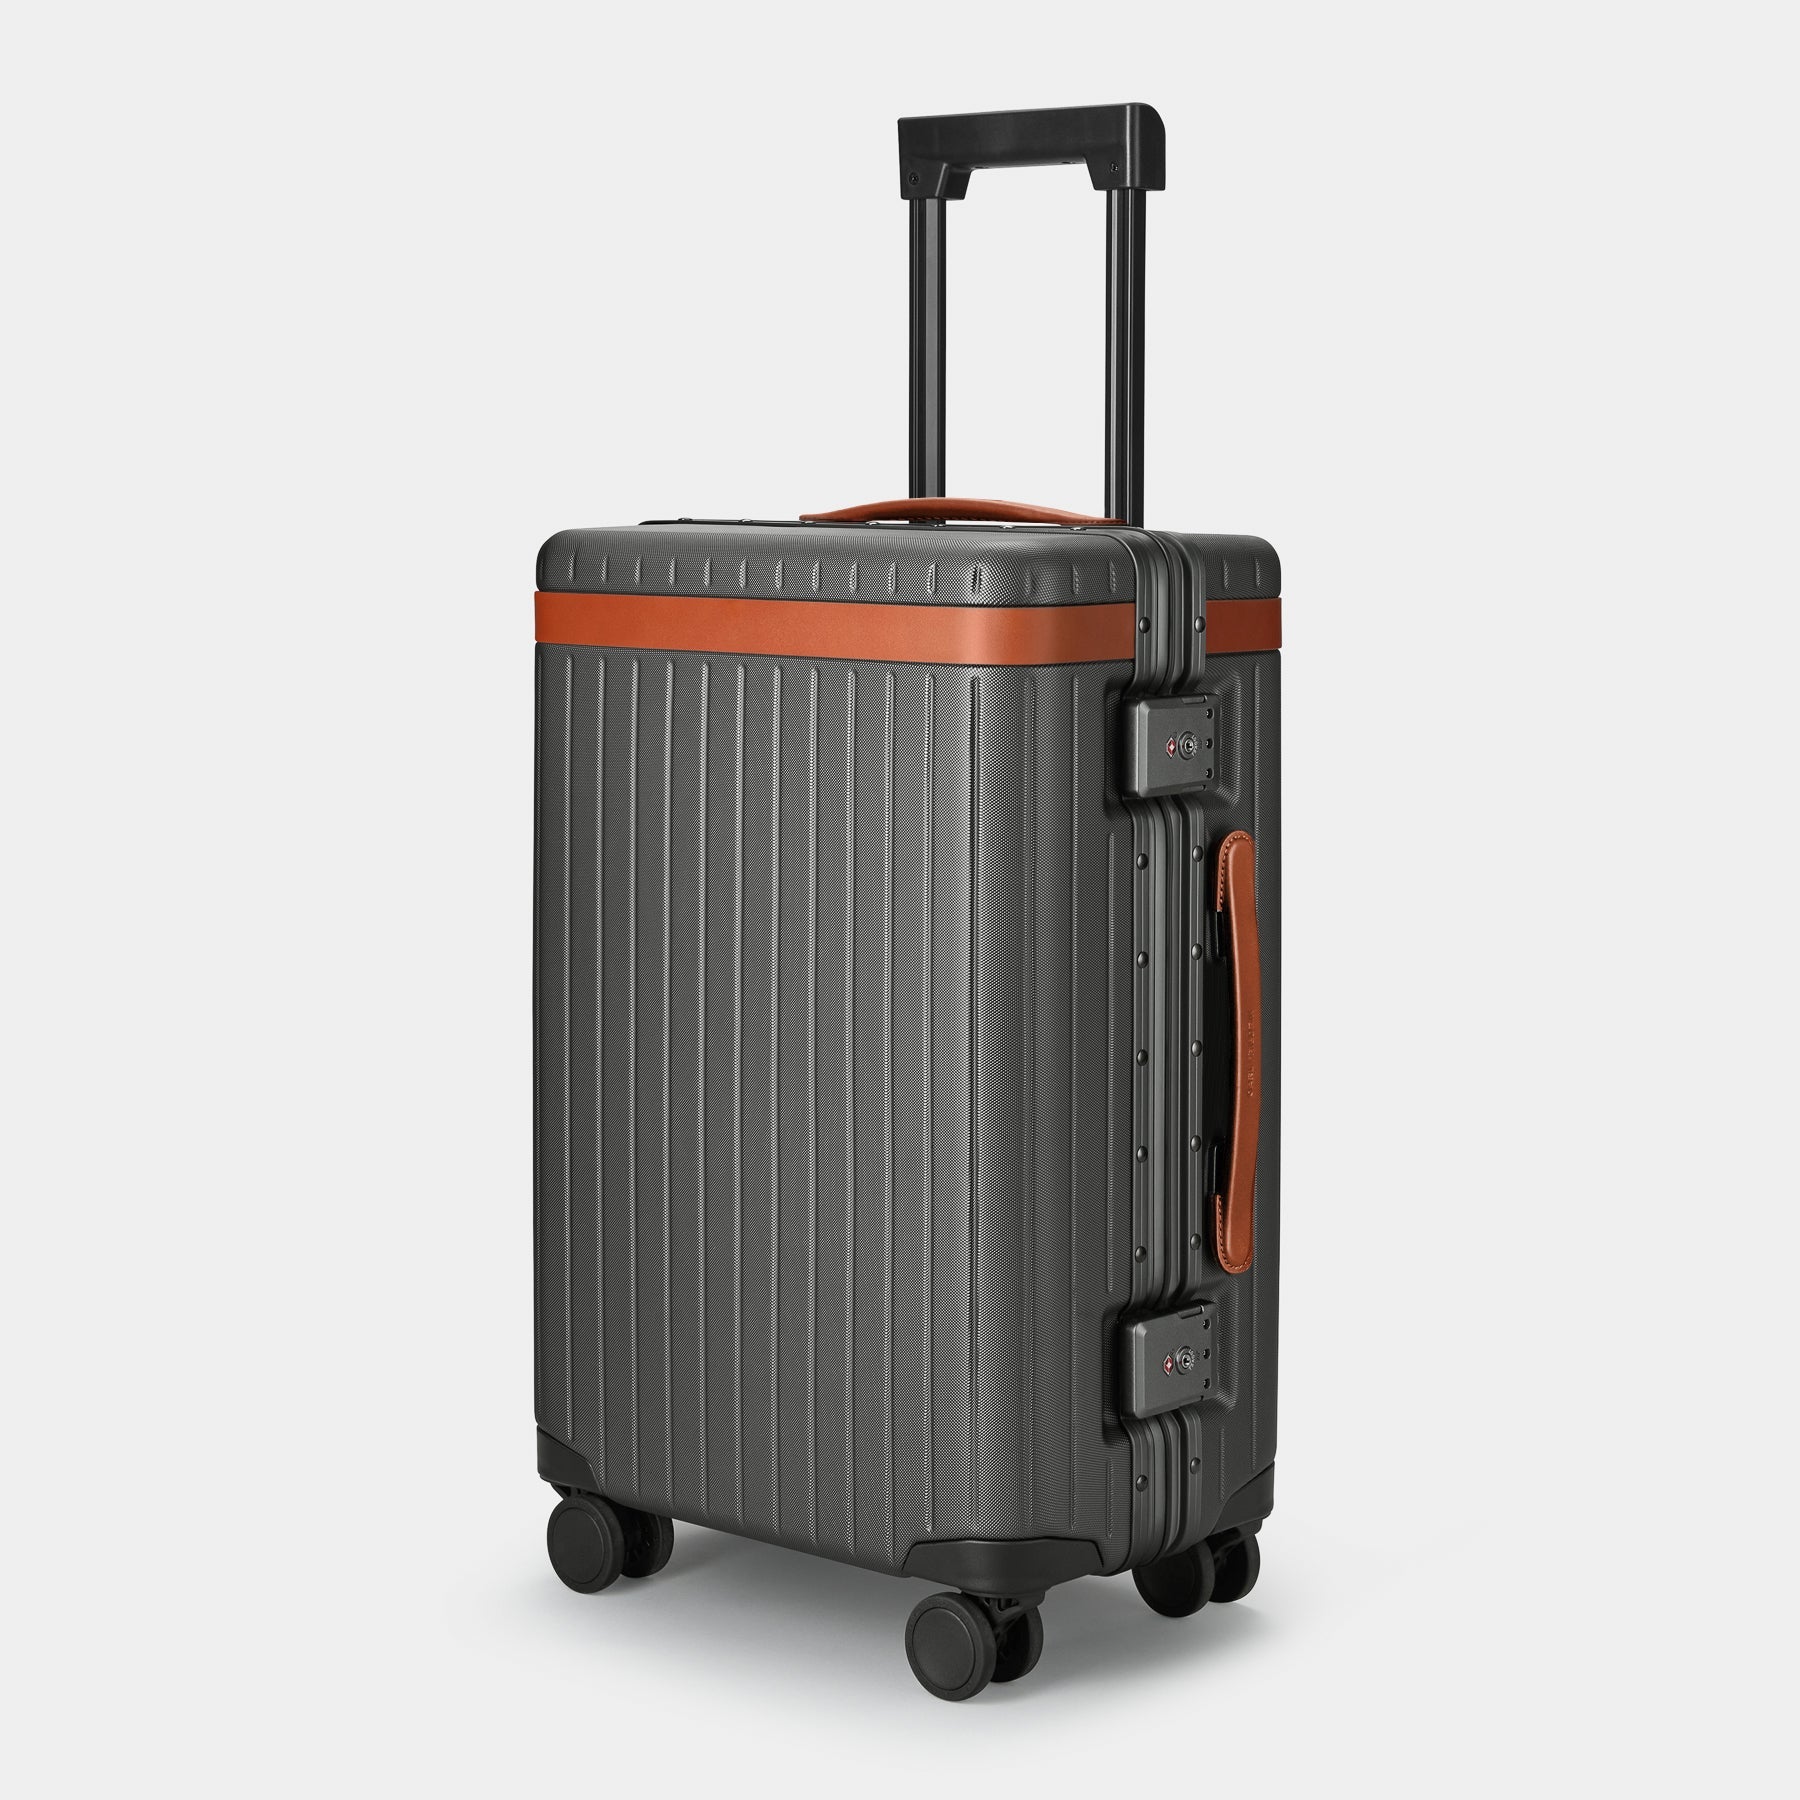 The Carry-on - Return Cognac Dark grey polycarbonate suitcase - Fair Condition